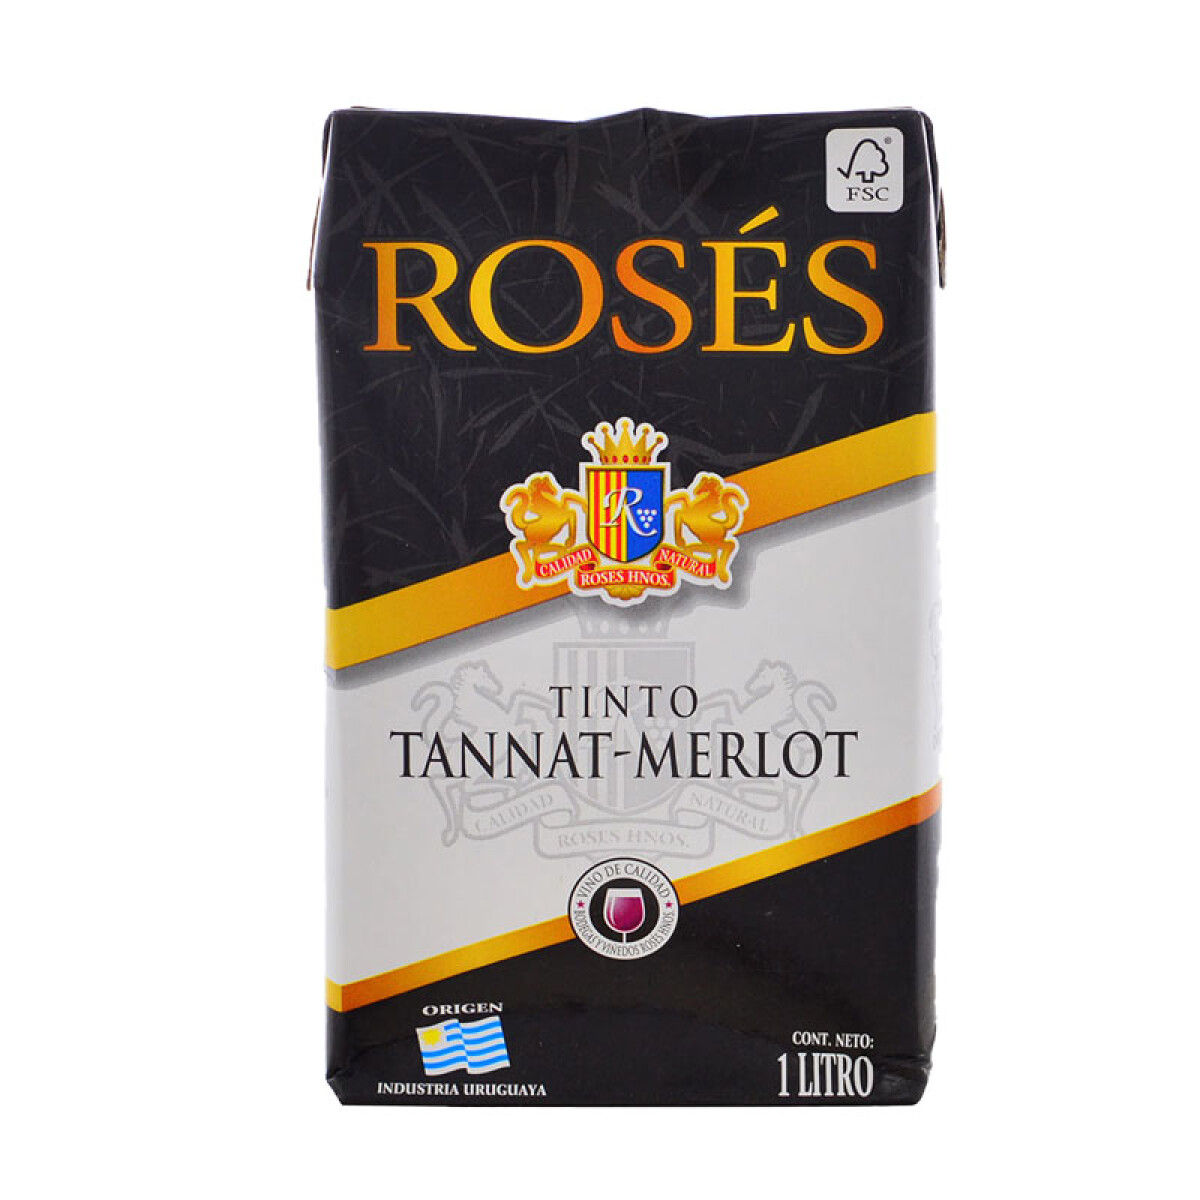 Vino ROSES 1L Tetra - Tinto tannat merlot 